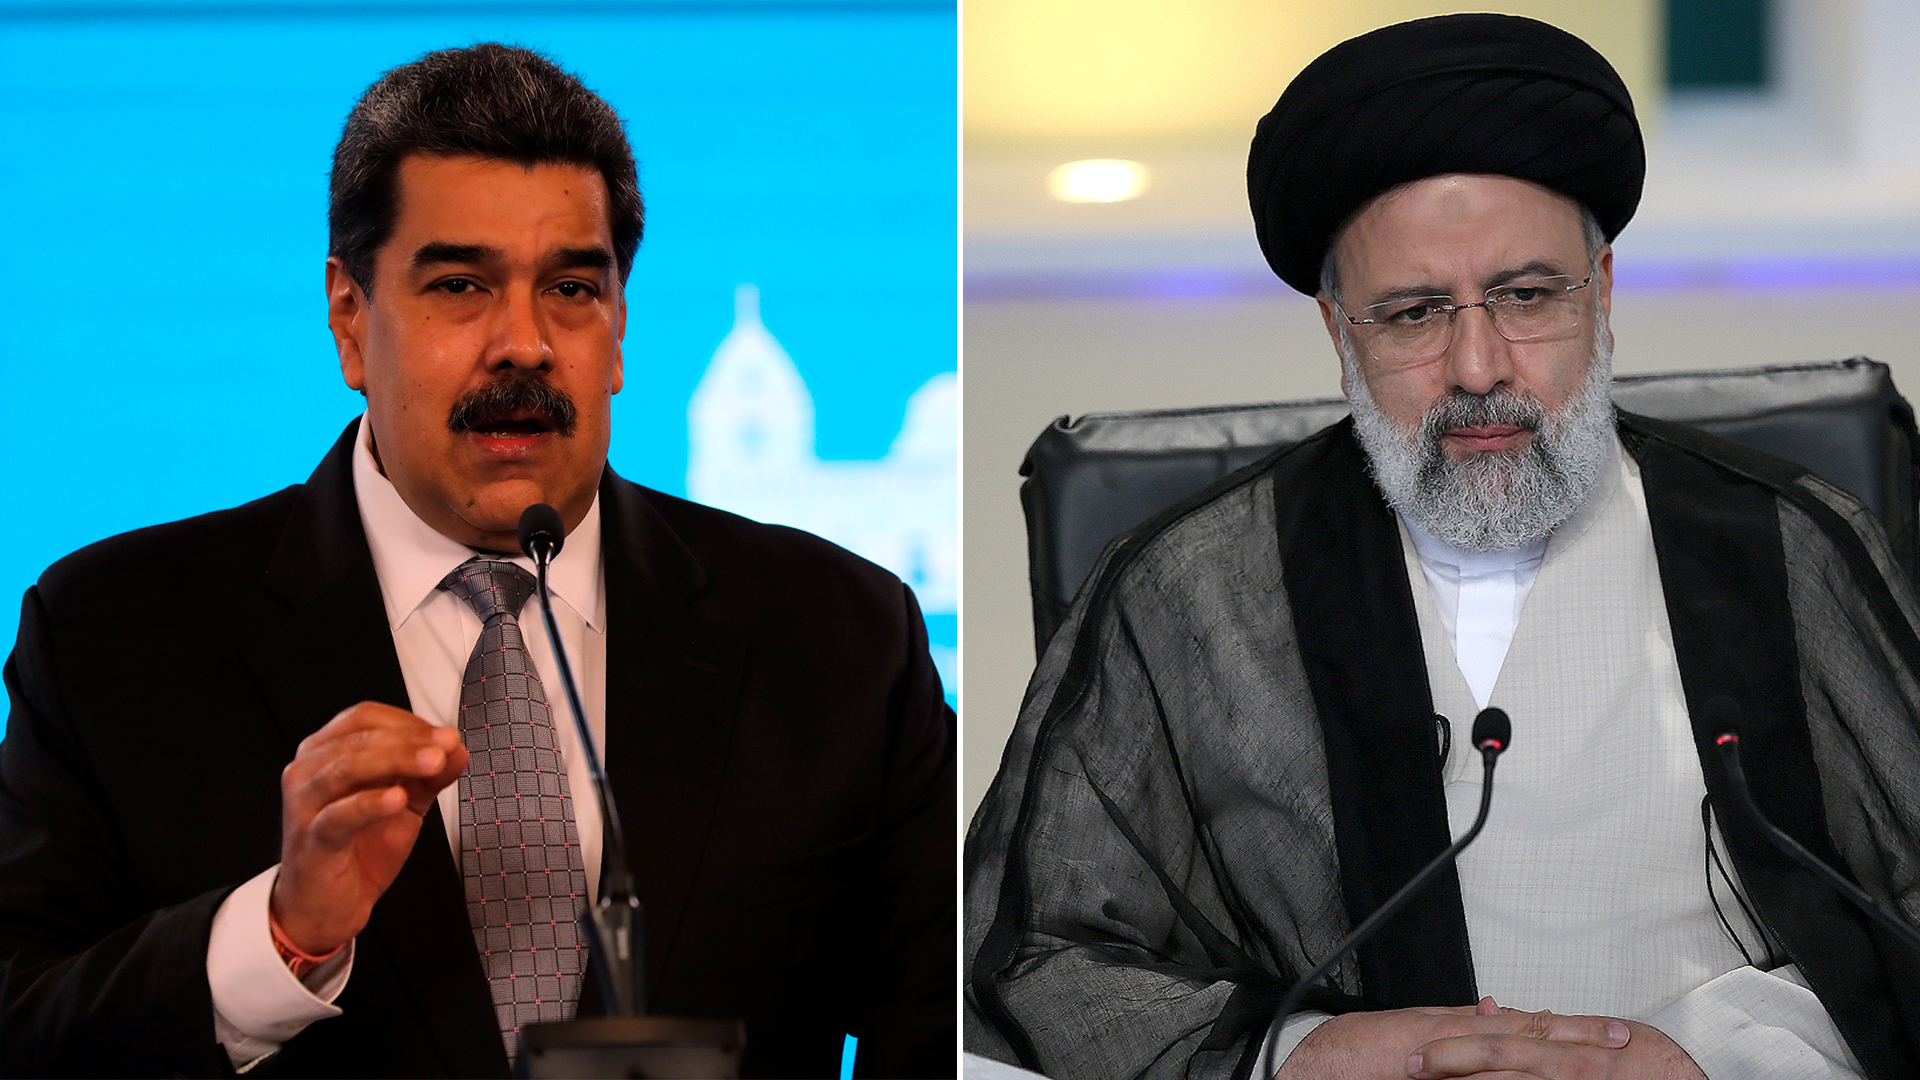 Nicolás Maduro y Ebrahim Raisi